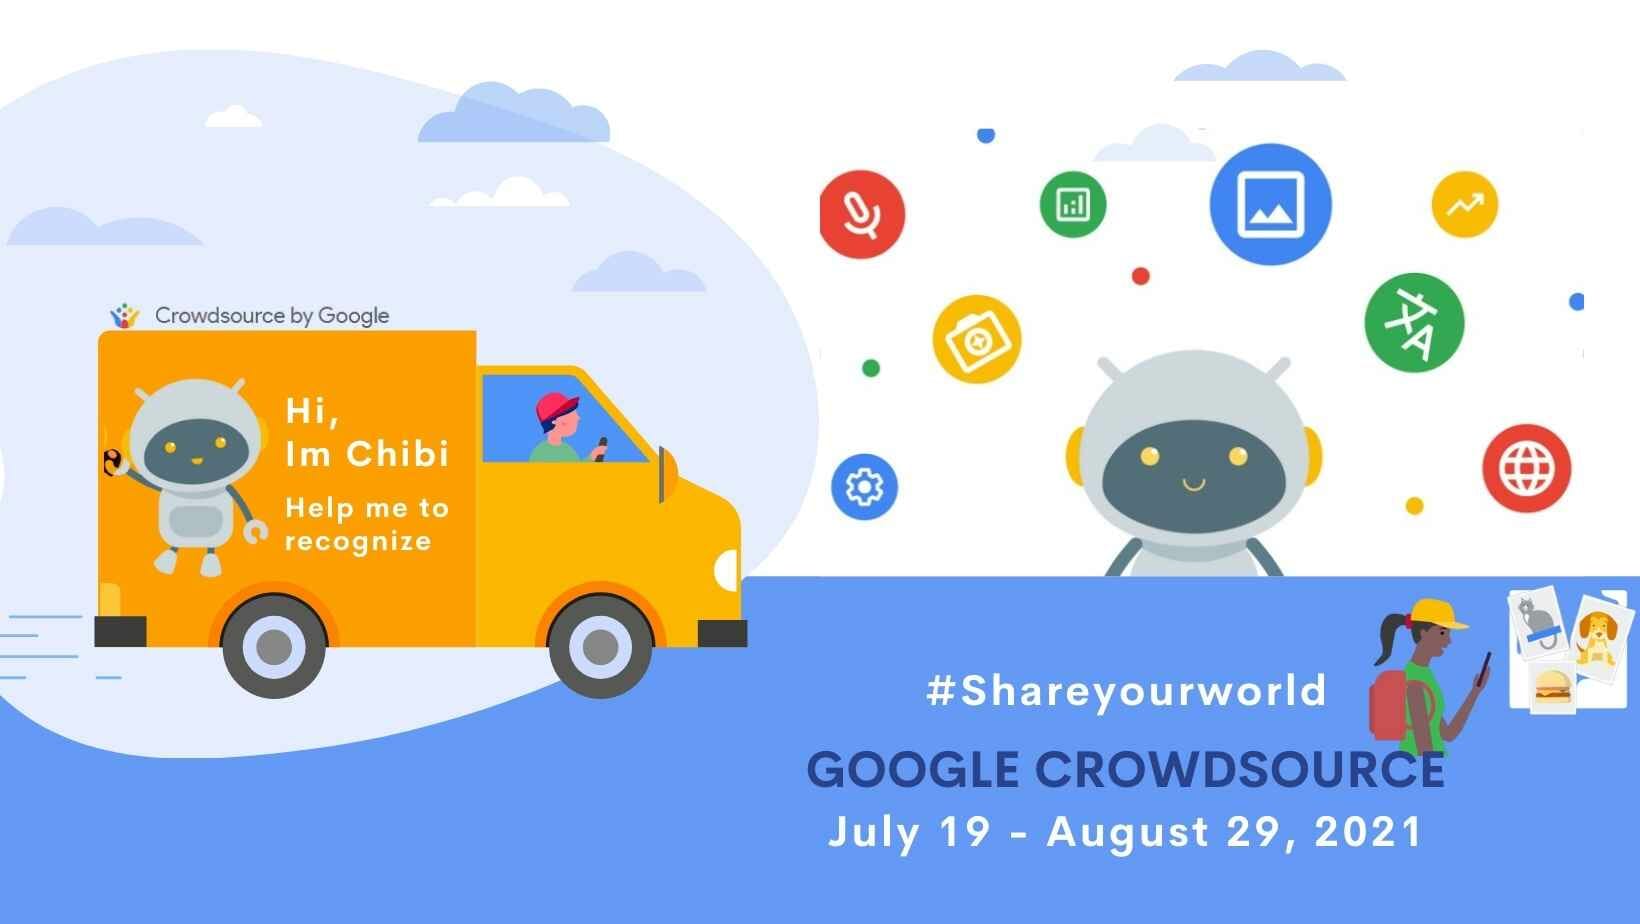 Google Crowdsource Share your world